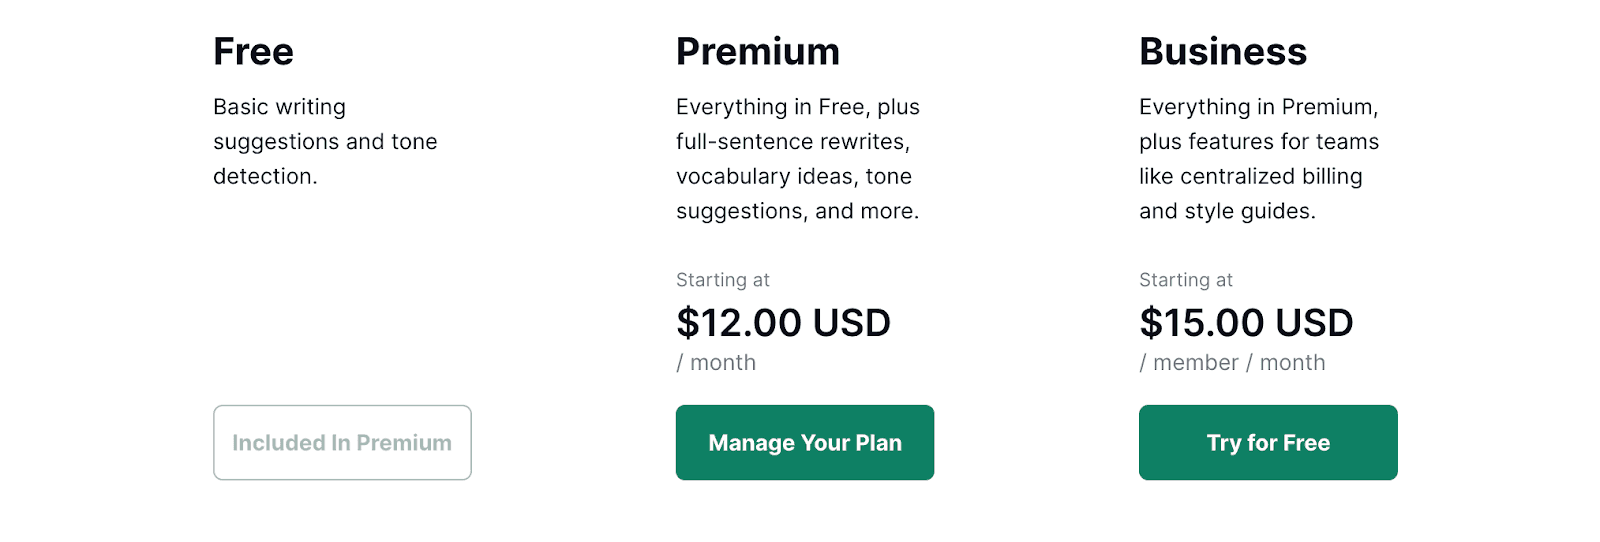 Grammarly pricing plans - Free, Premium, Business